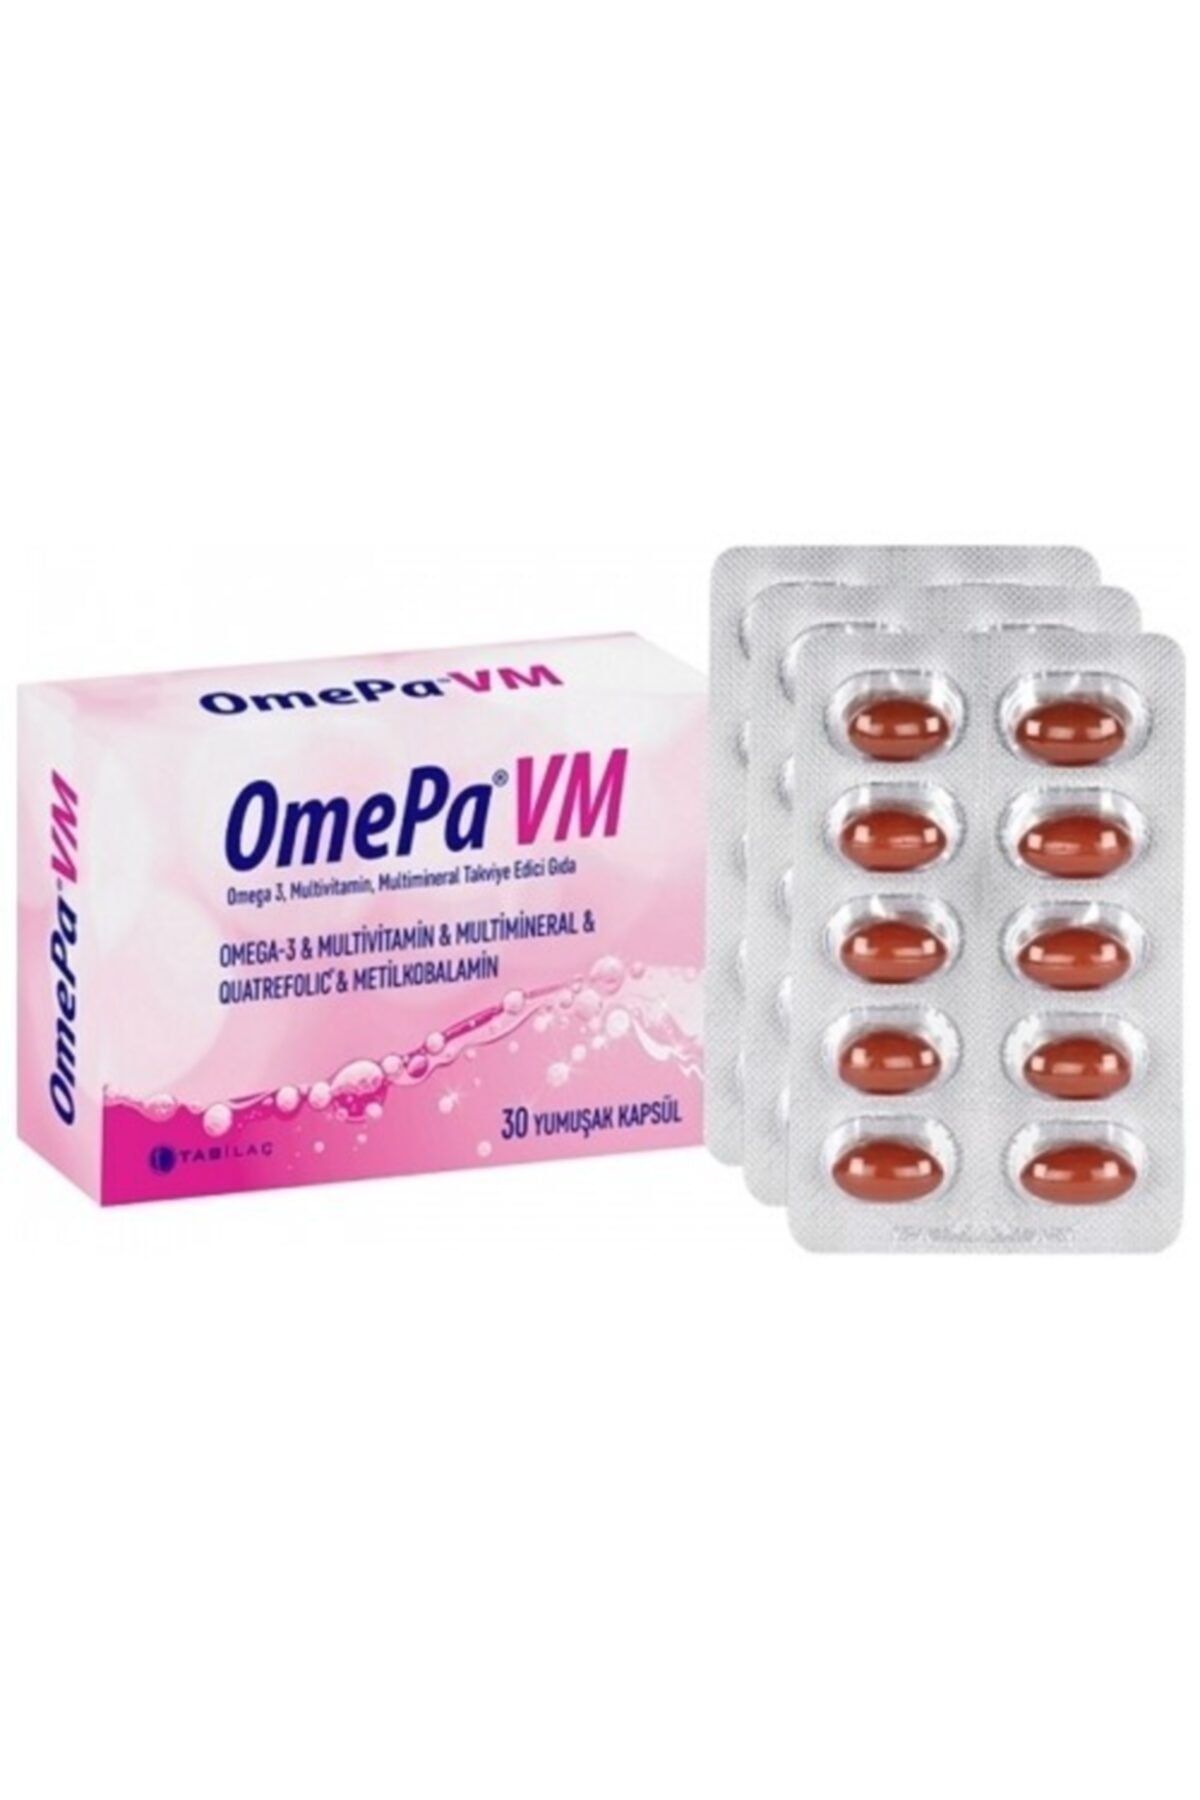 Omepa Vm-omega+vitamin+mineral 30 Yumuşak Kapsül-skt:10/2022